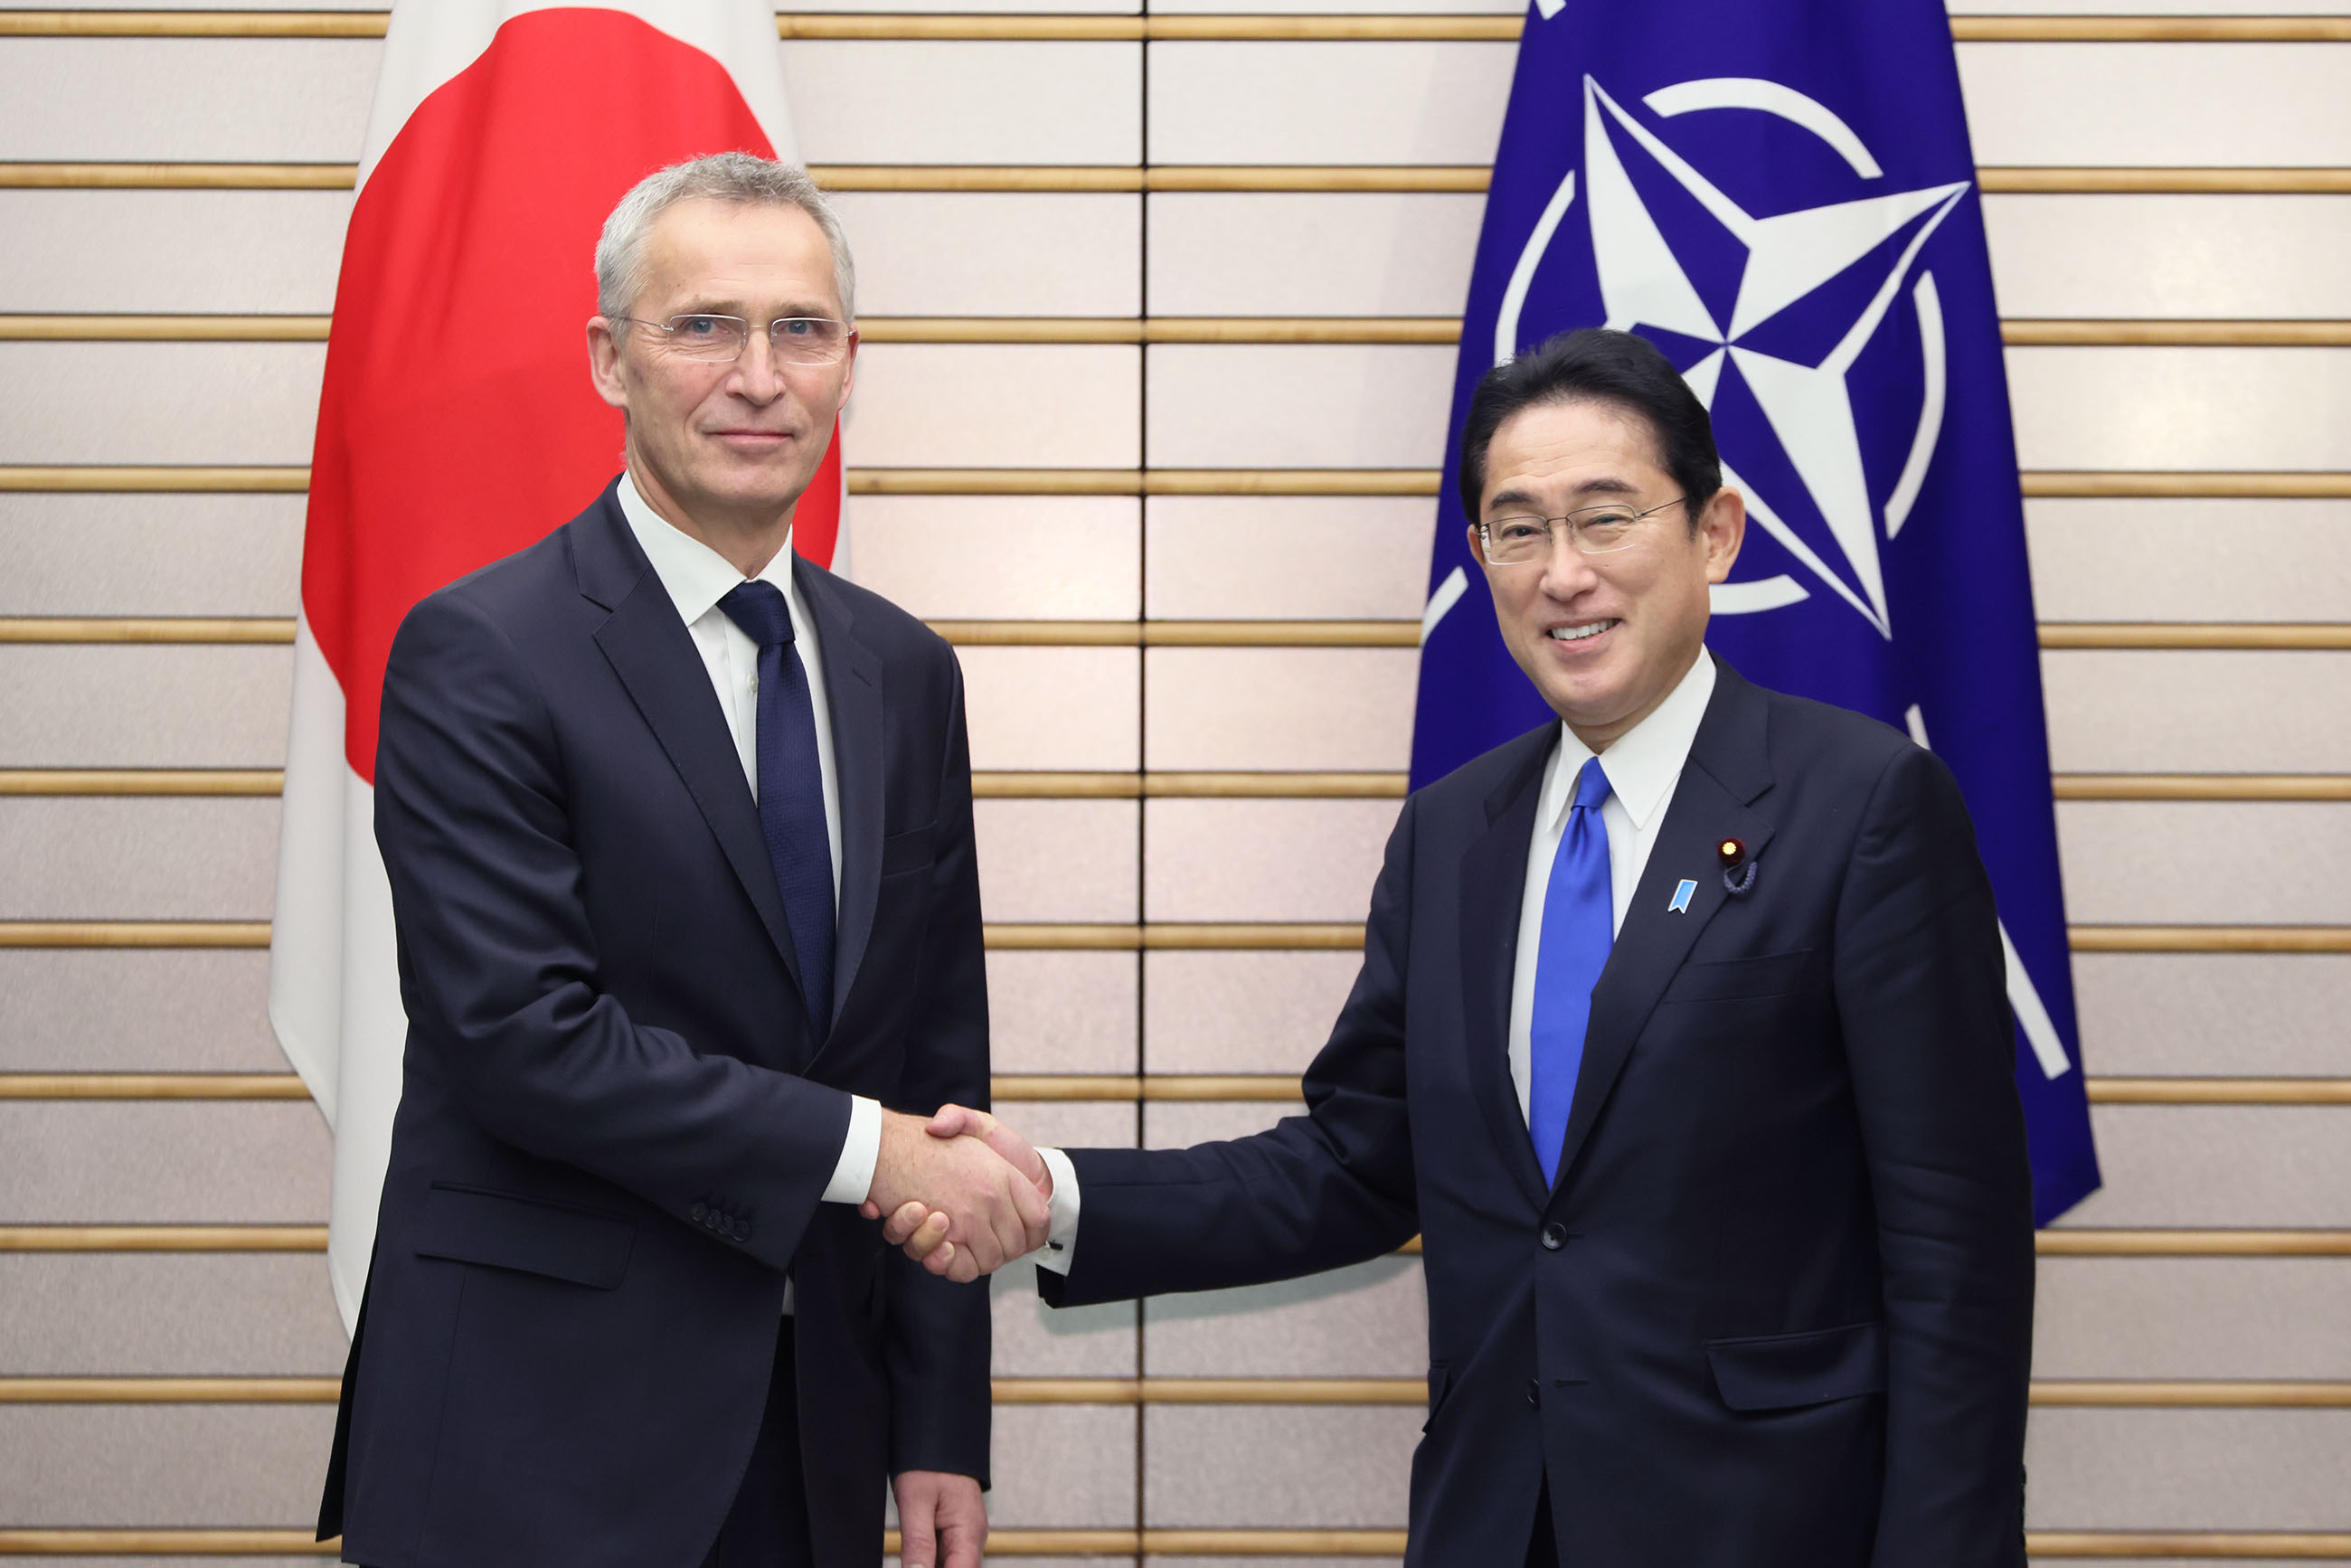 Prime Minister Kishida shaking hands with NATO Secretary General (1)